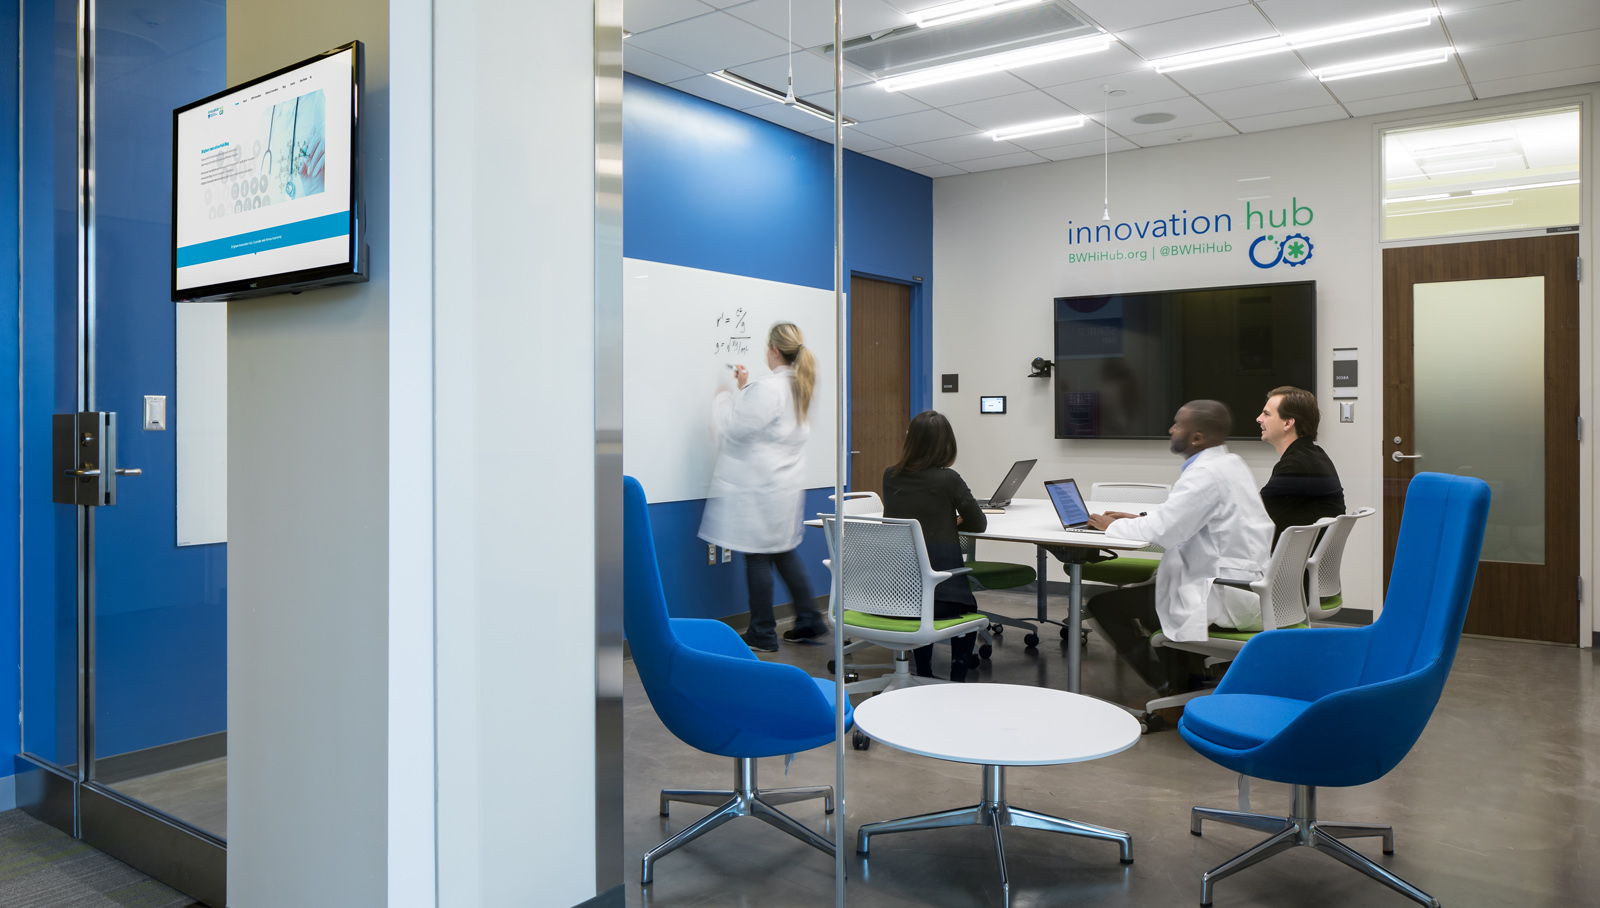 Brigham And Women's Hospital Interior conference room innovation hub